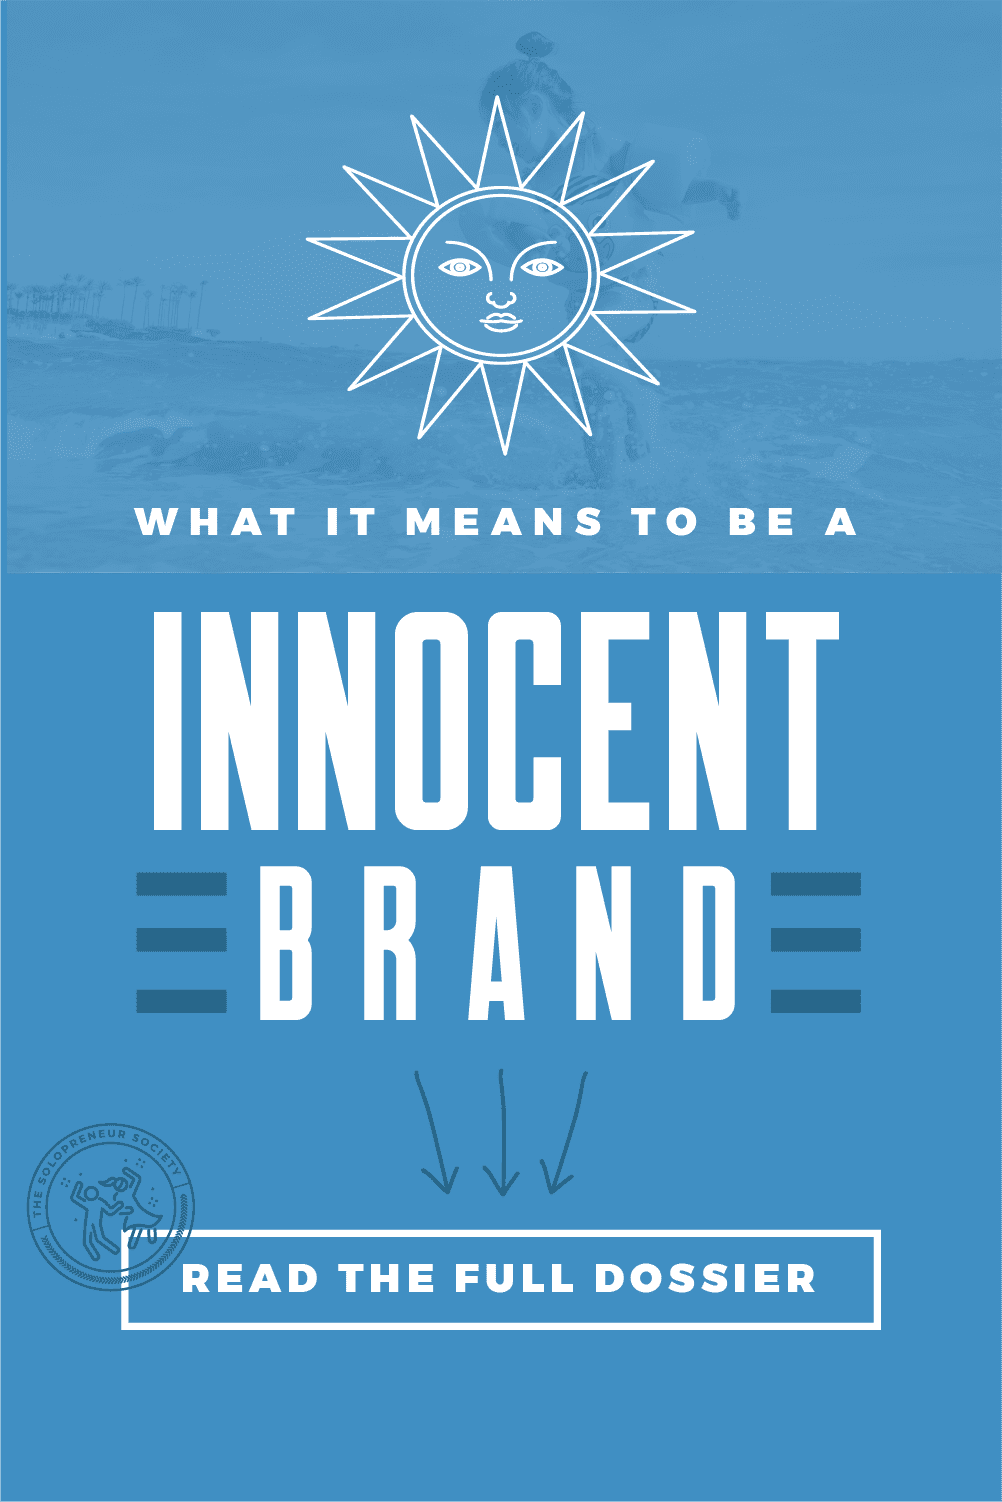 Innocent Archetype Brand Personality